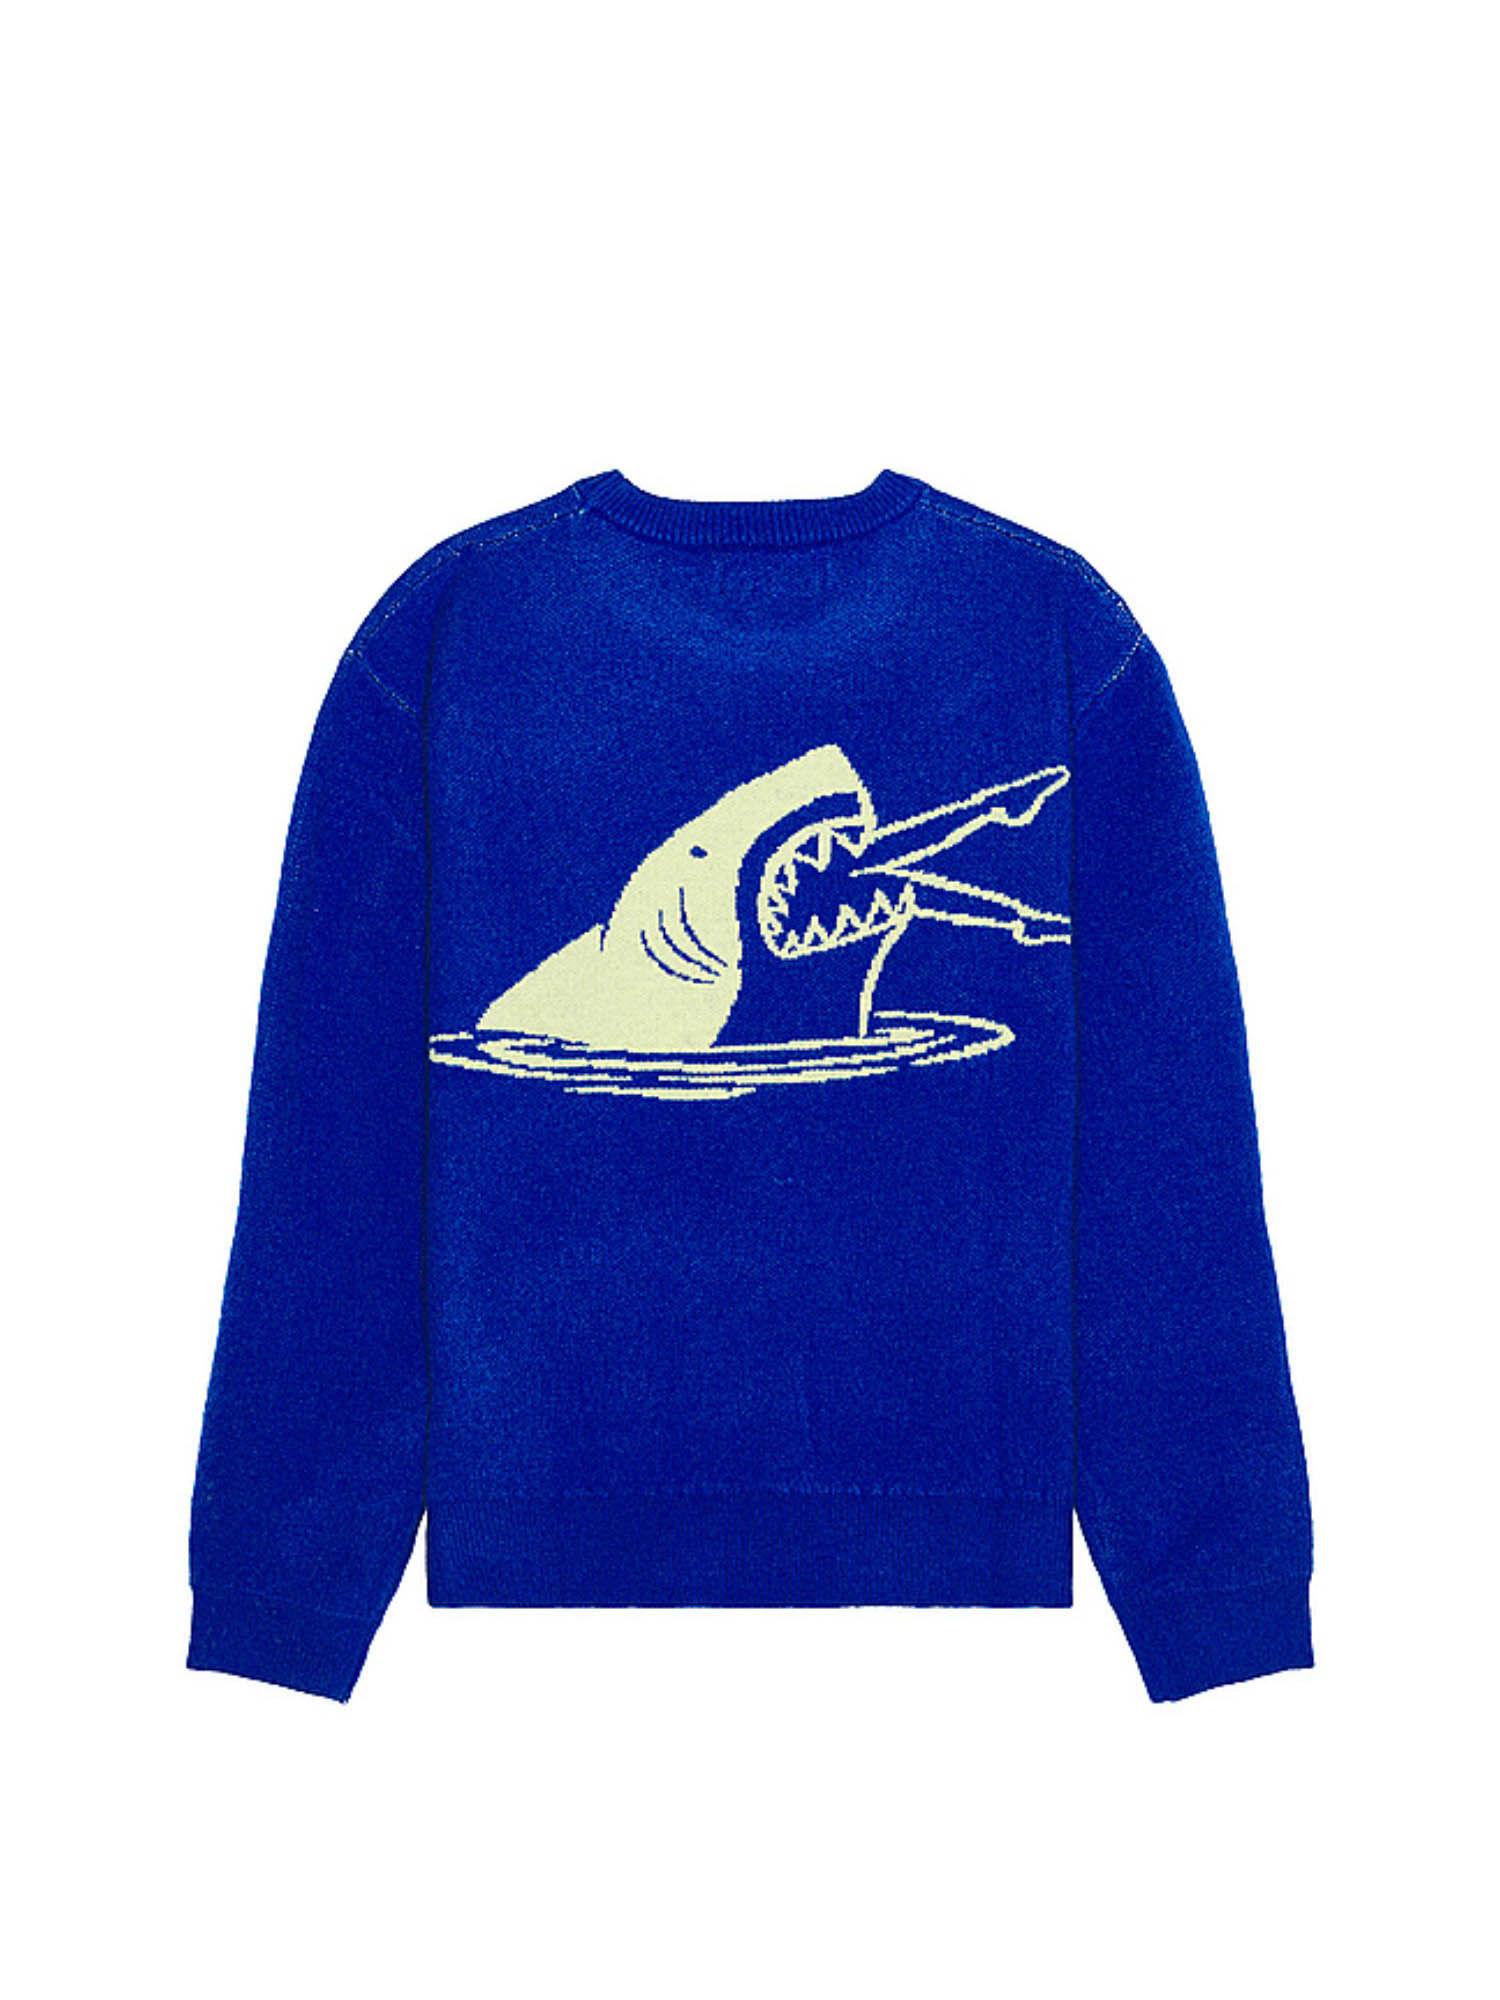 shark-bite-crew-knit-sweater